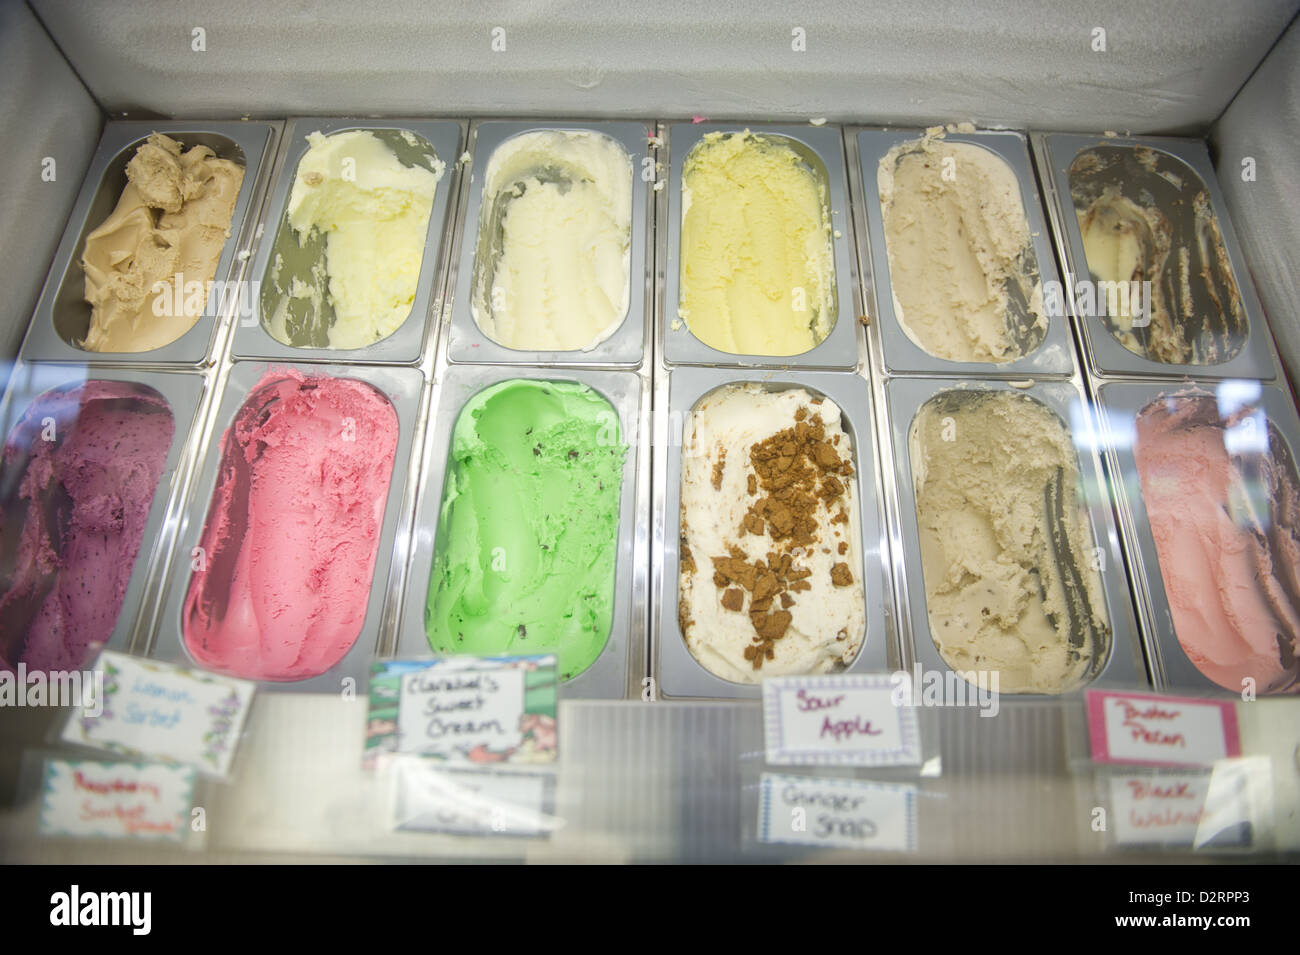 https://c8.alamy.com/comp/D2RPP3/freezer-of-ice-cream-flavors-D2RPP3.jpg